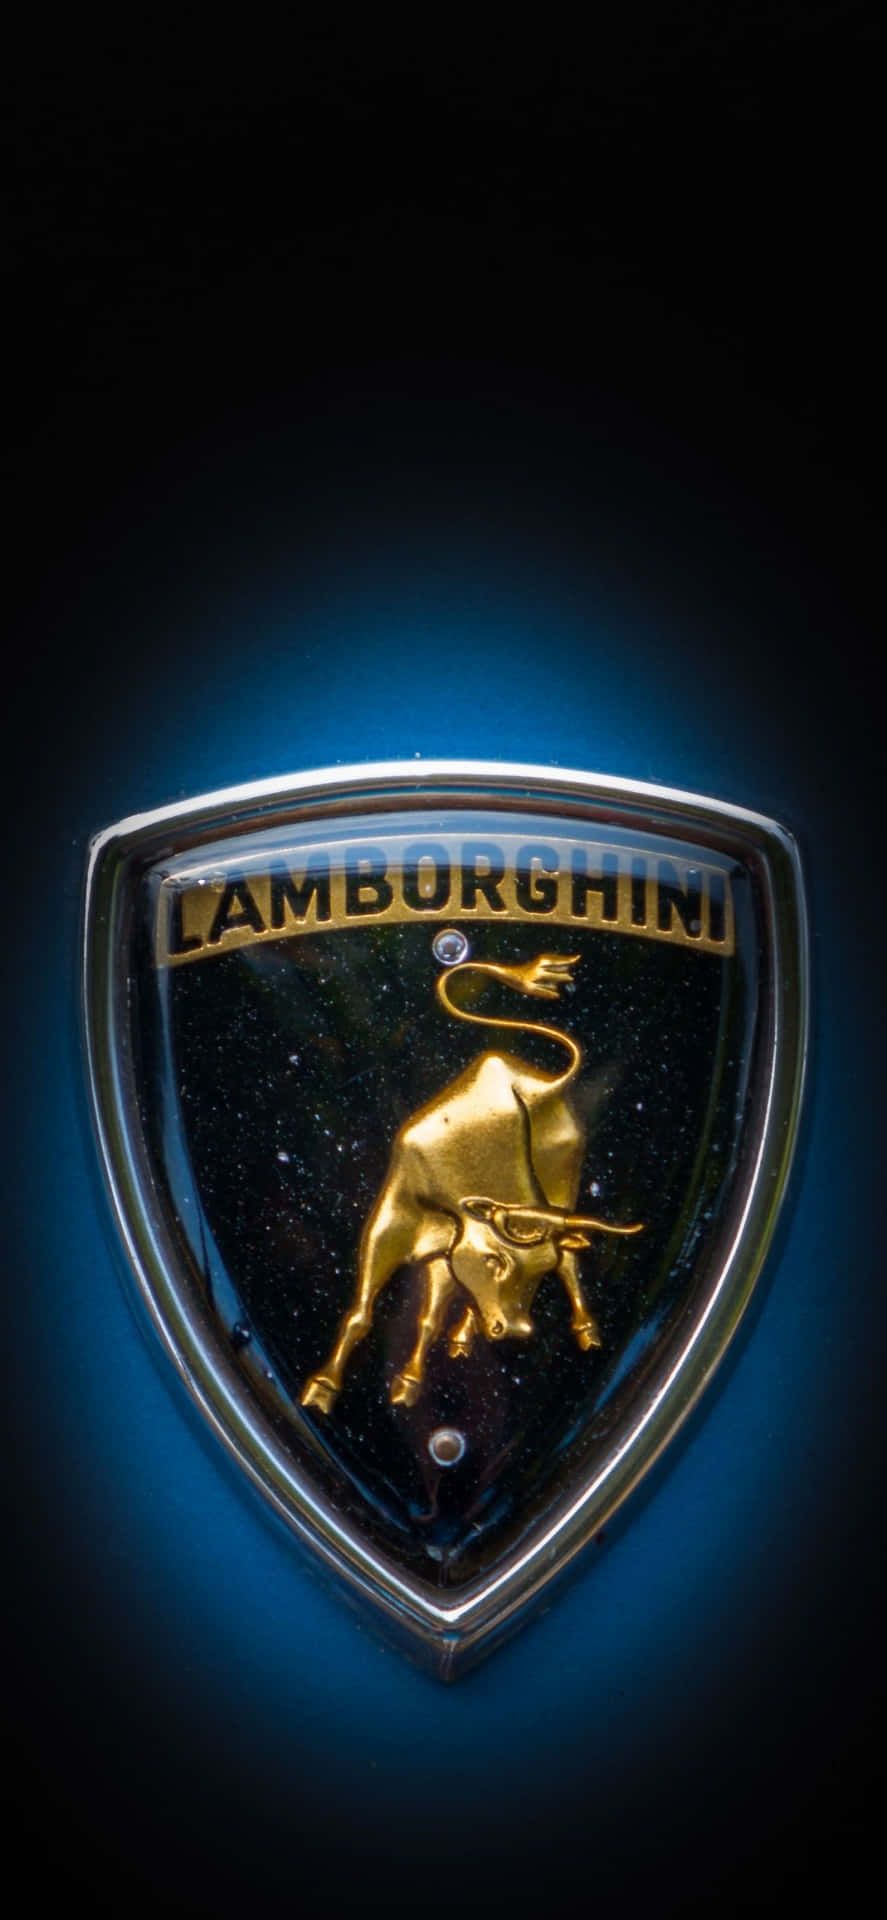 Unlock Luxury with the iPhone X and Lamborghini